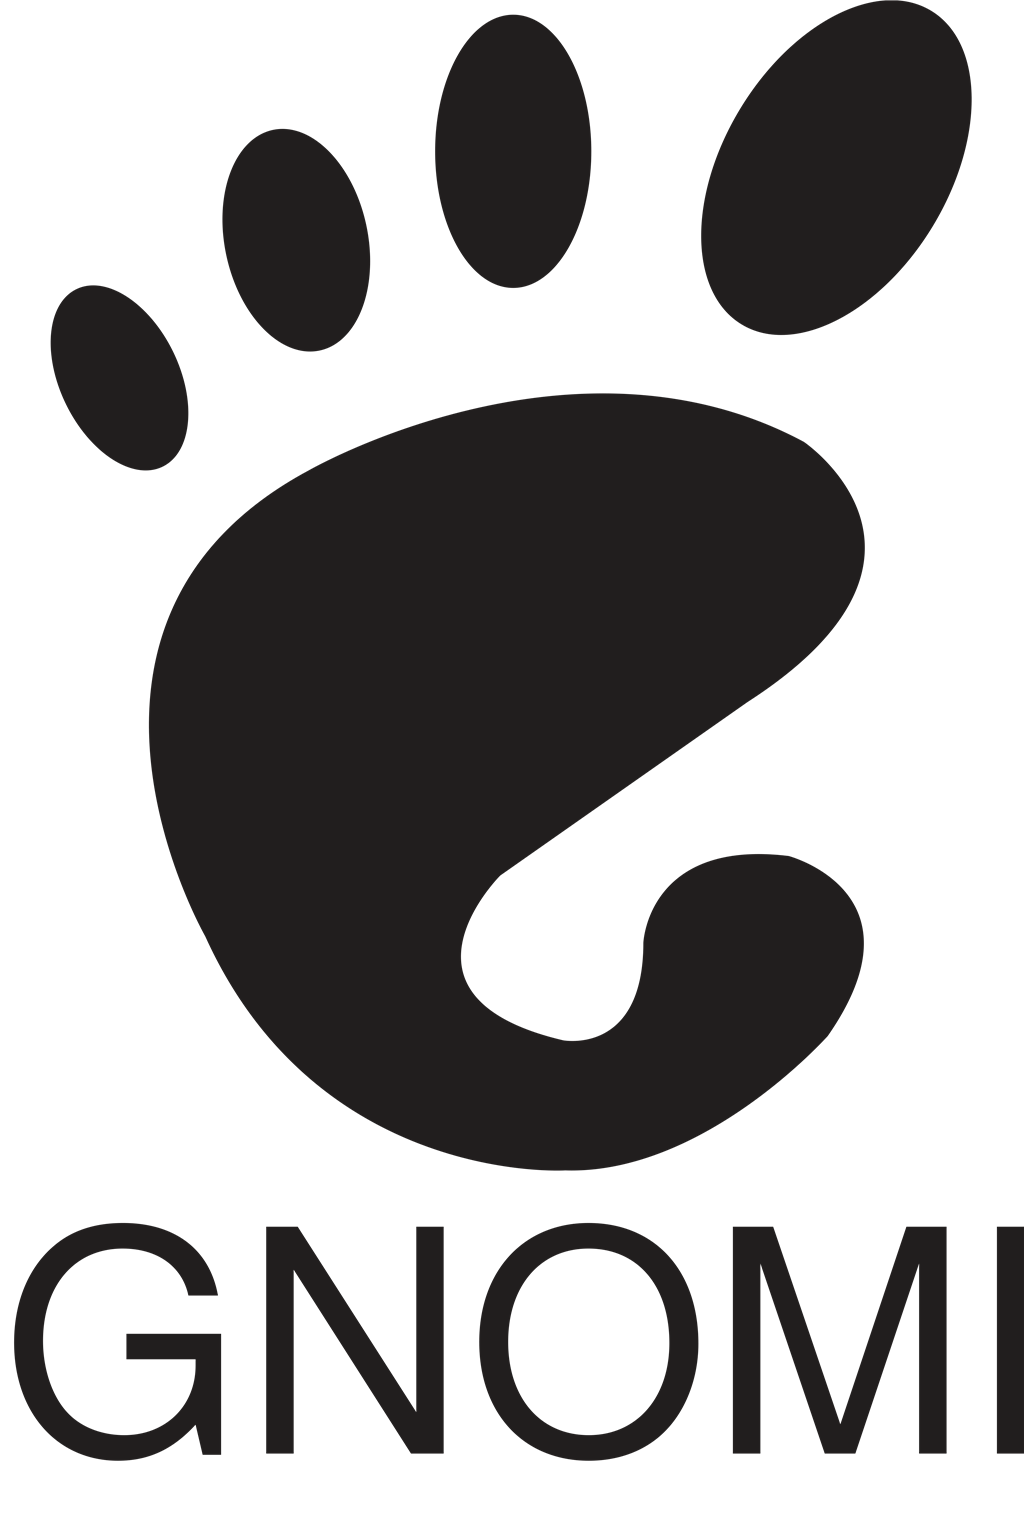 Gnome logotype, transparent .png, medium, large